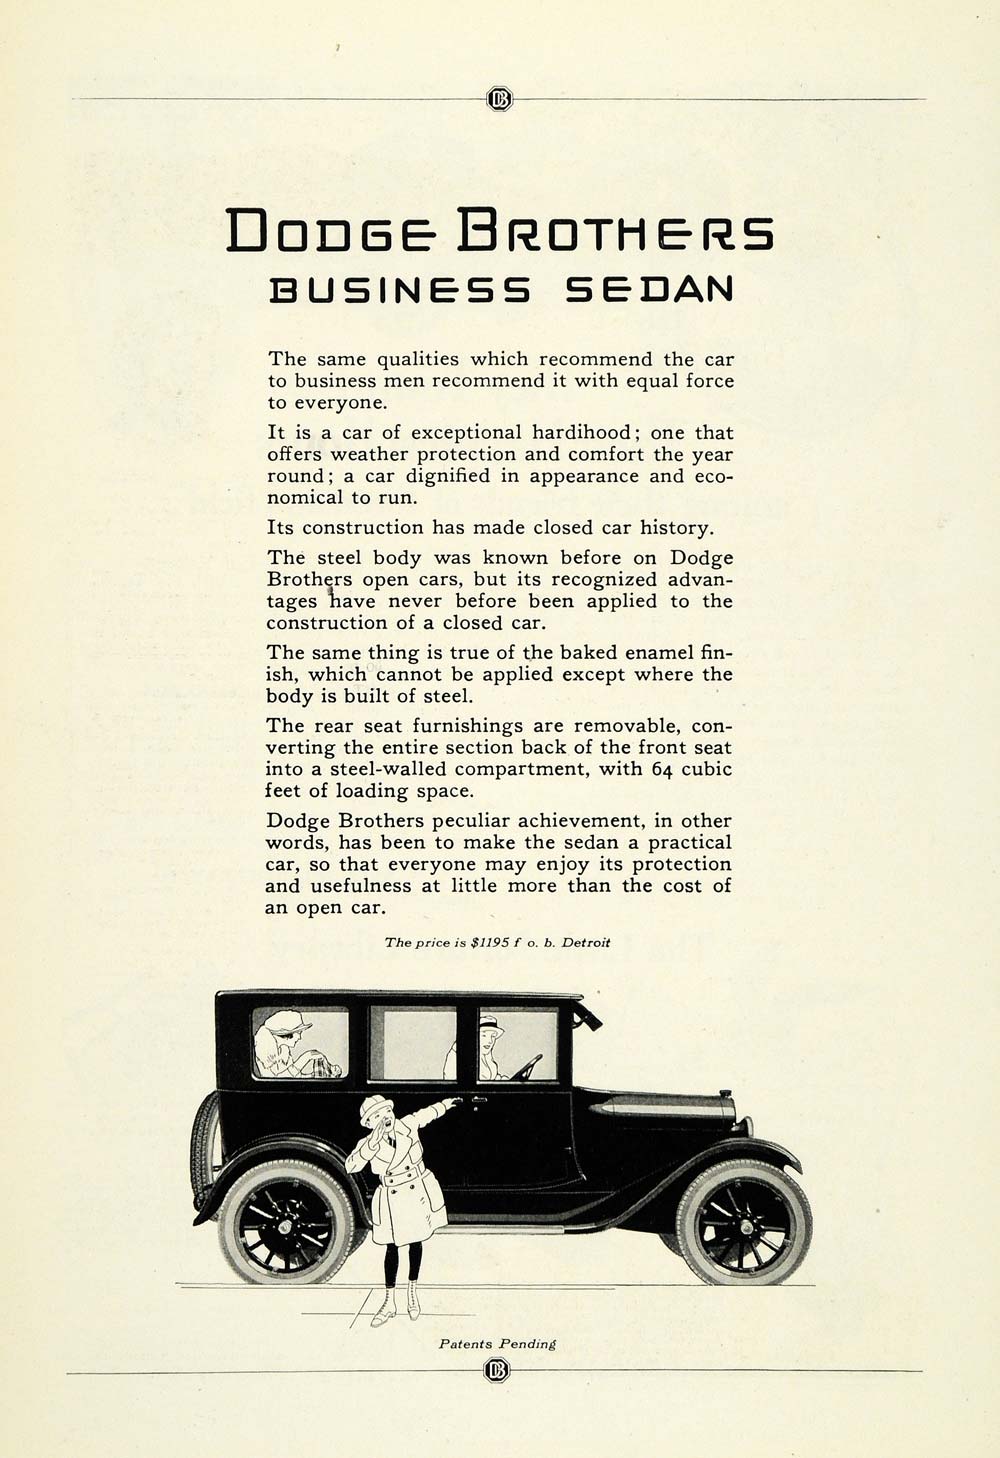 1923 Ad Dodge Brothers Sedan Detroit Michigan Vehicle Car Transportation NGM1